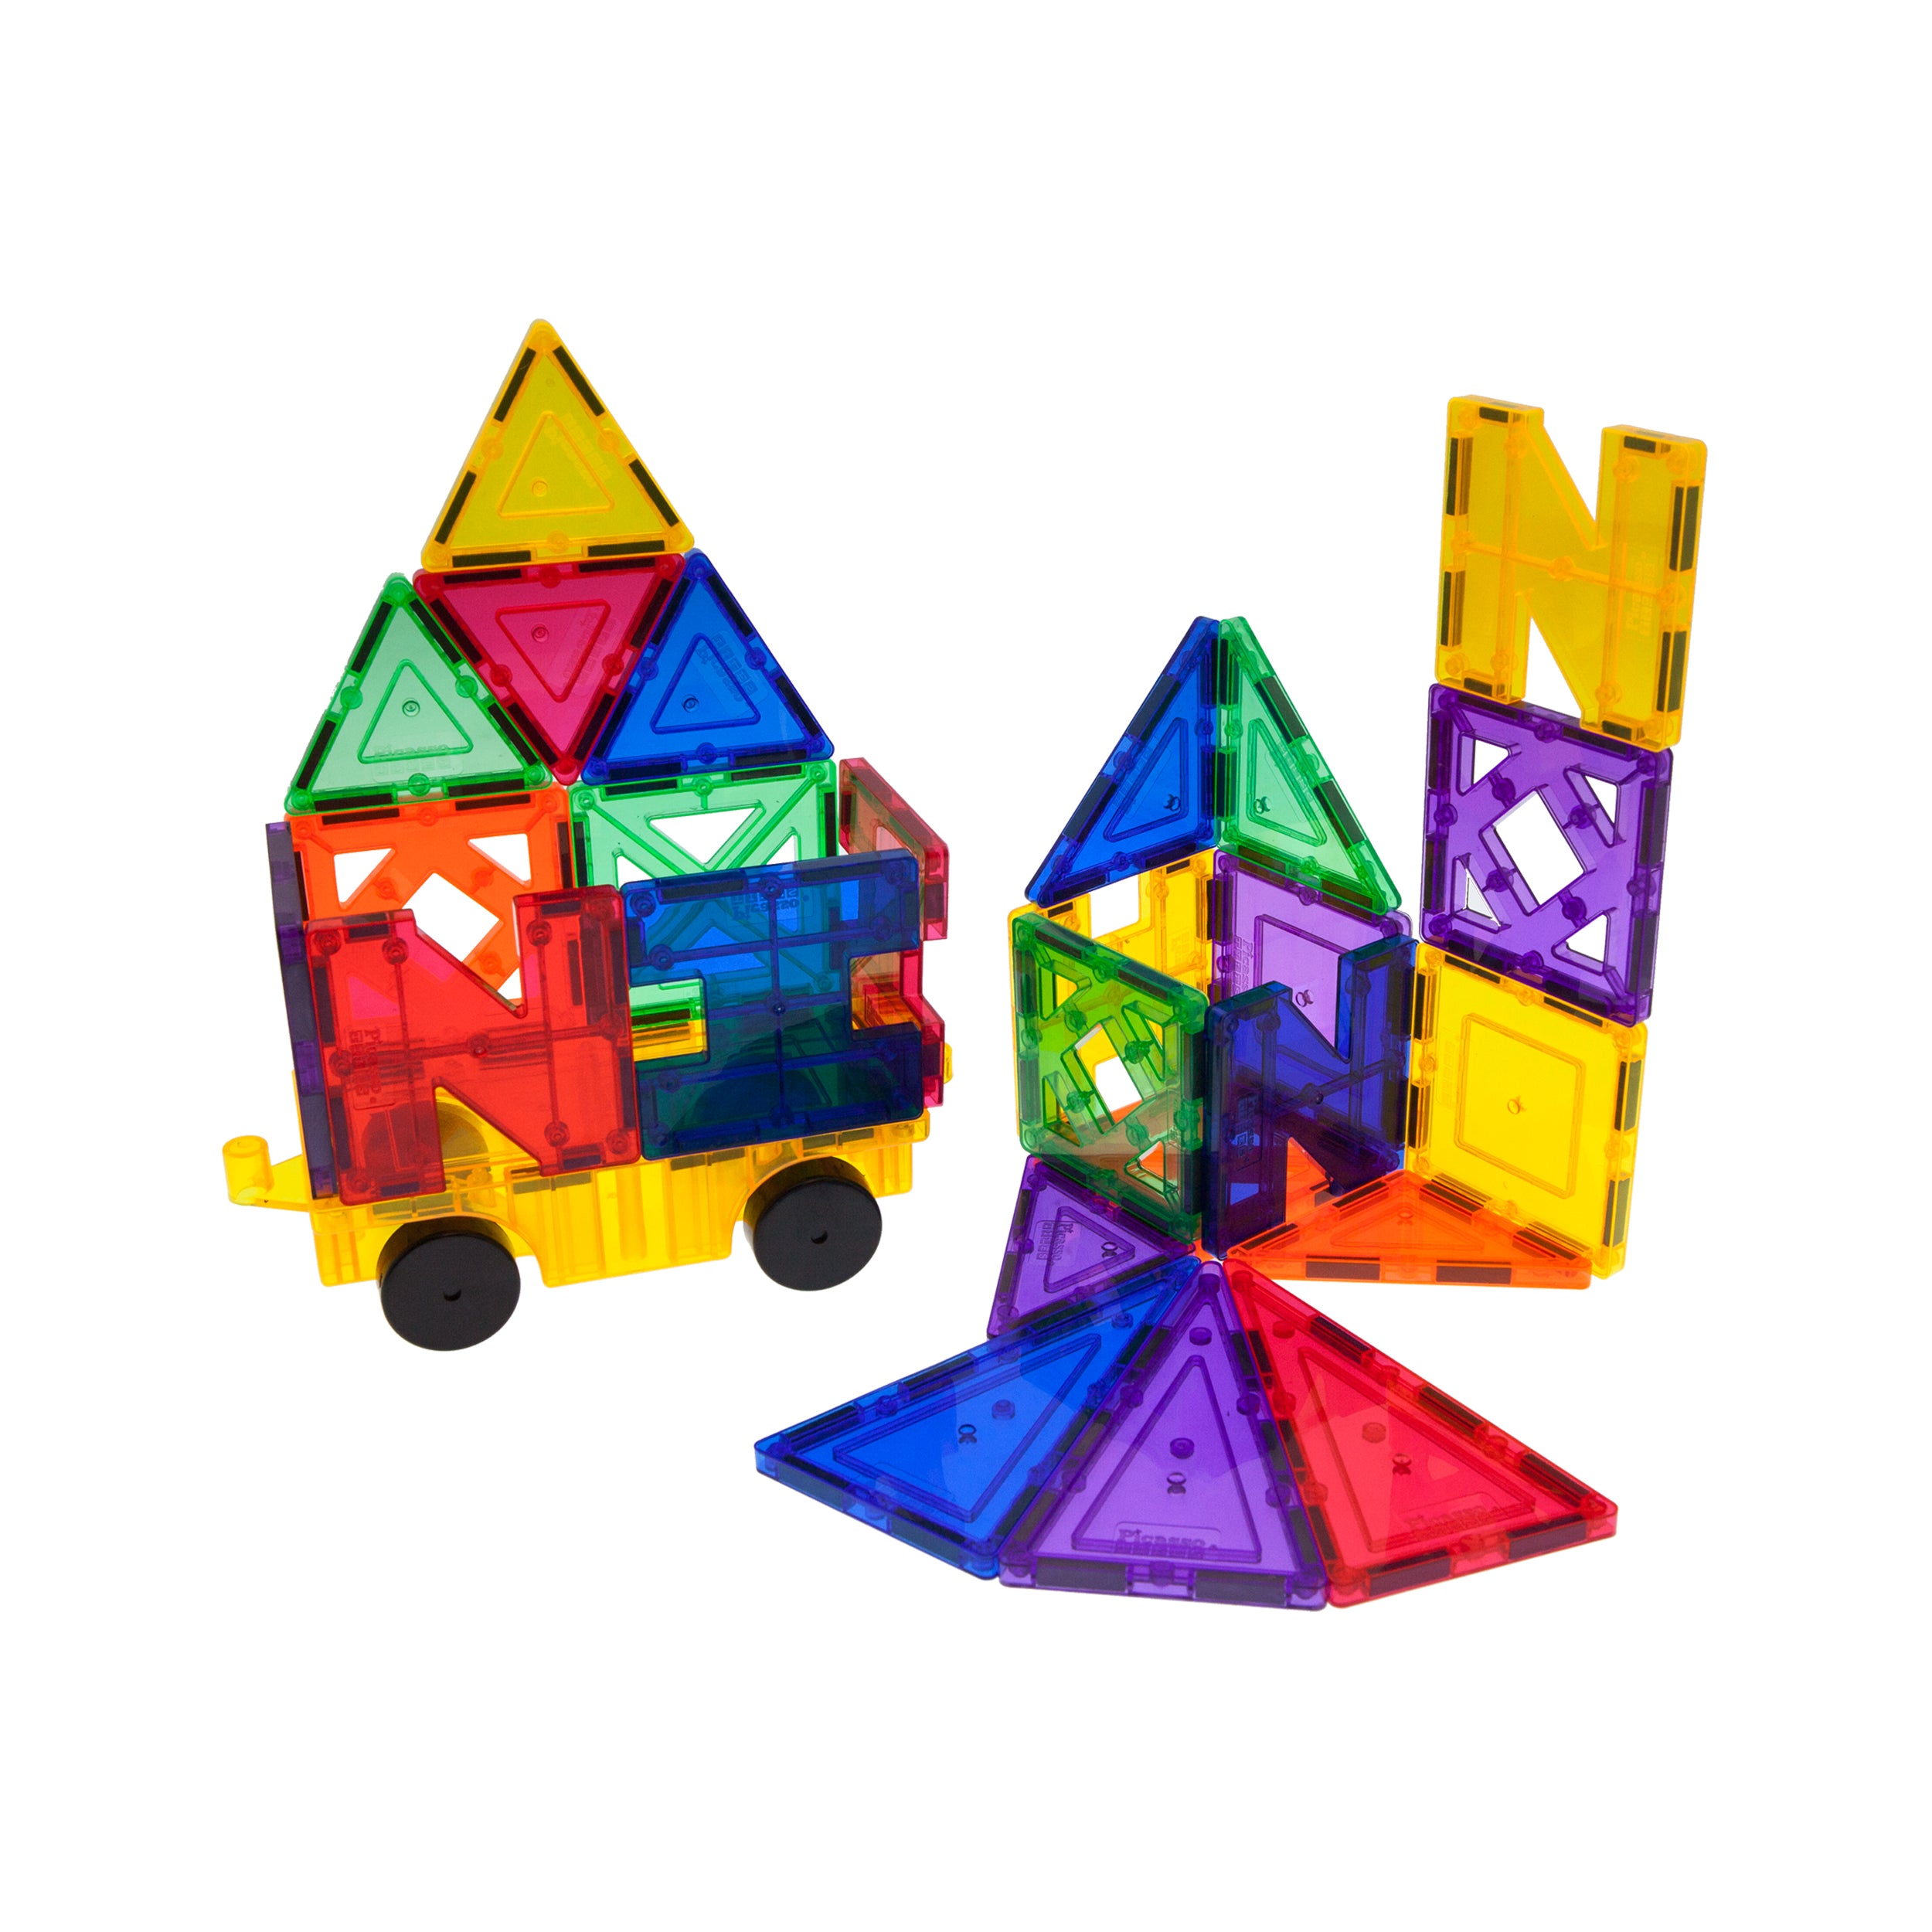 PicassoTiles Magnet Tile Car Base Stack-n-Build Set - 26 Pieces